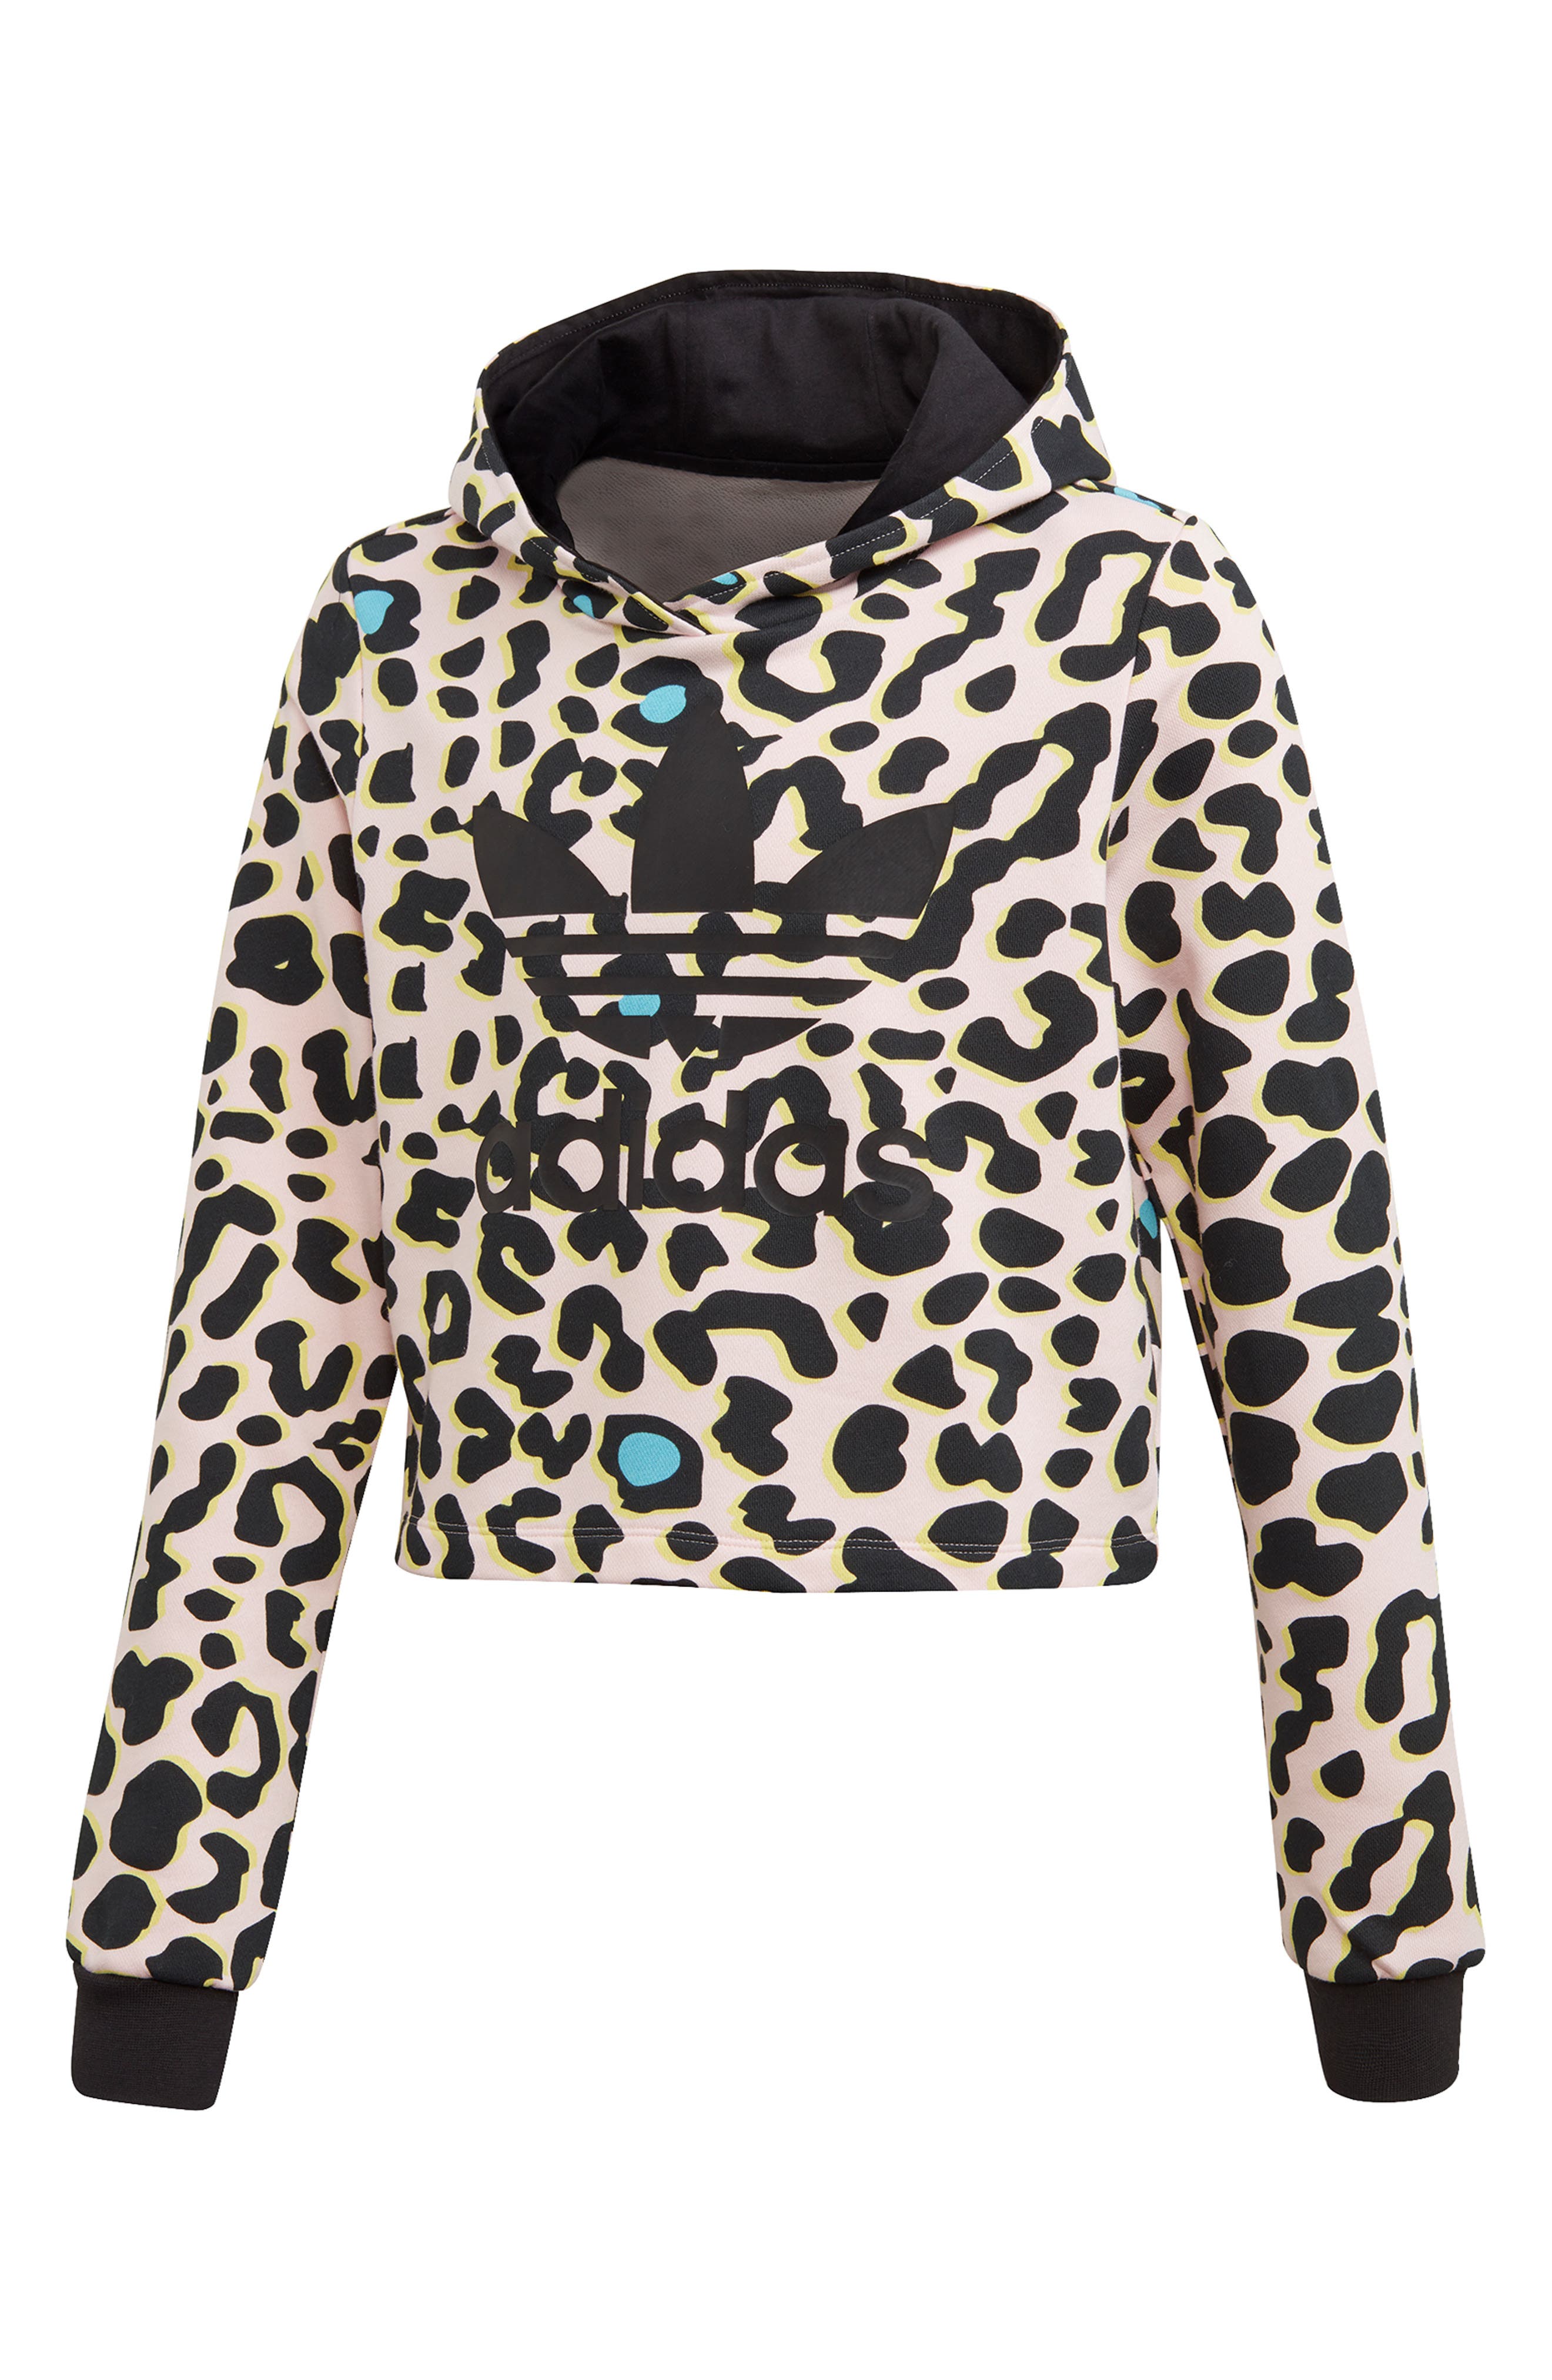 adidas originals leopard jacket